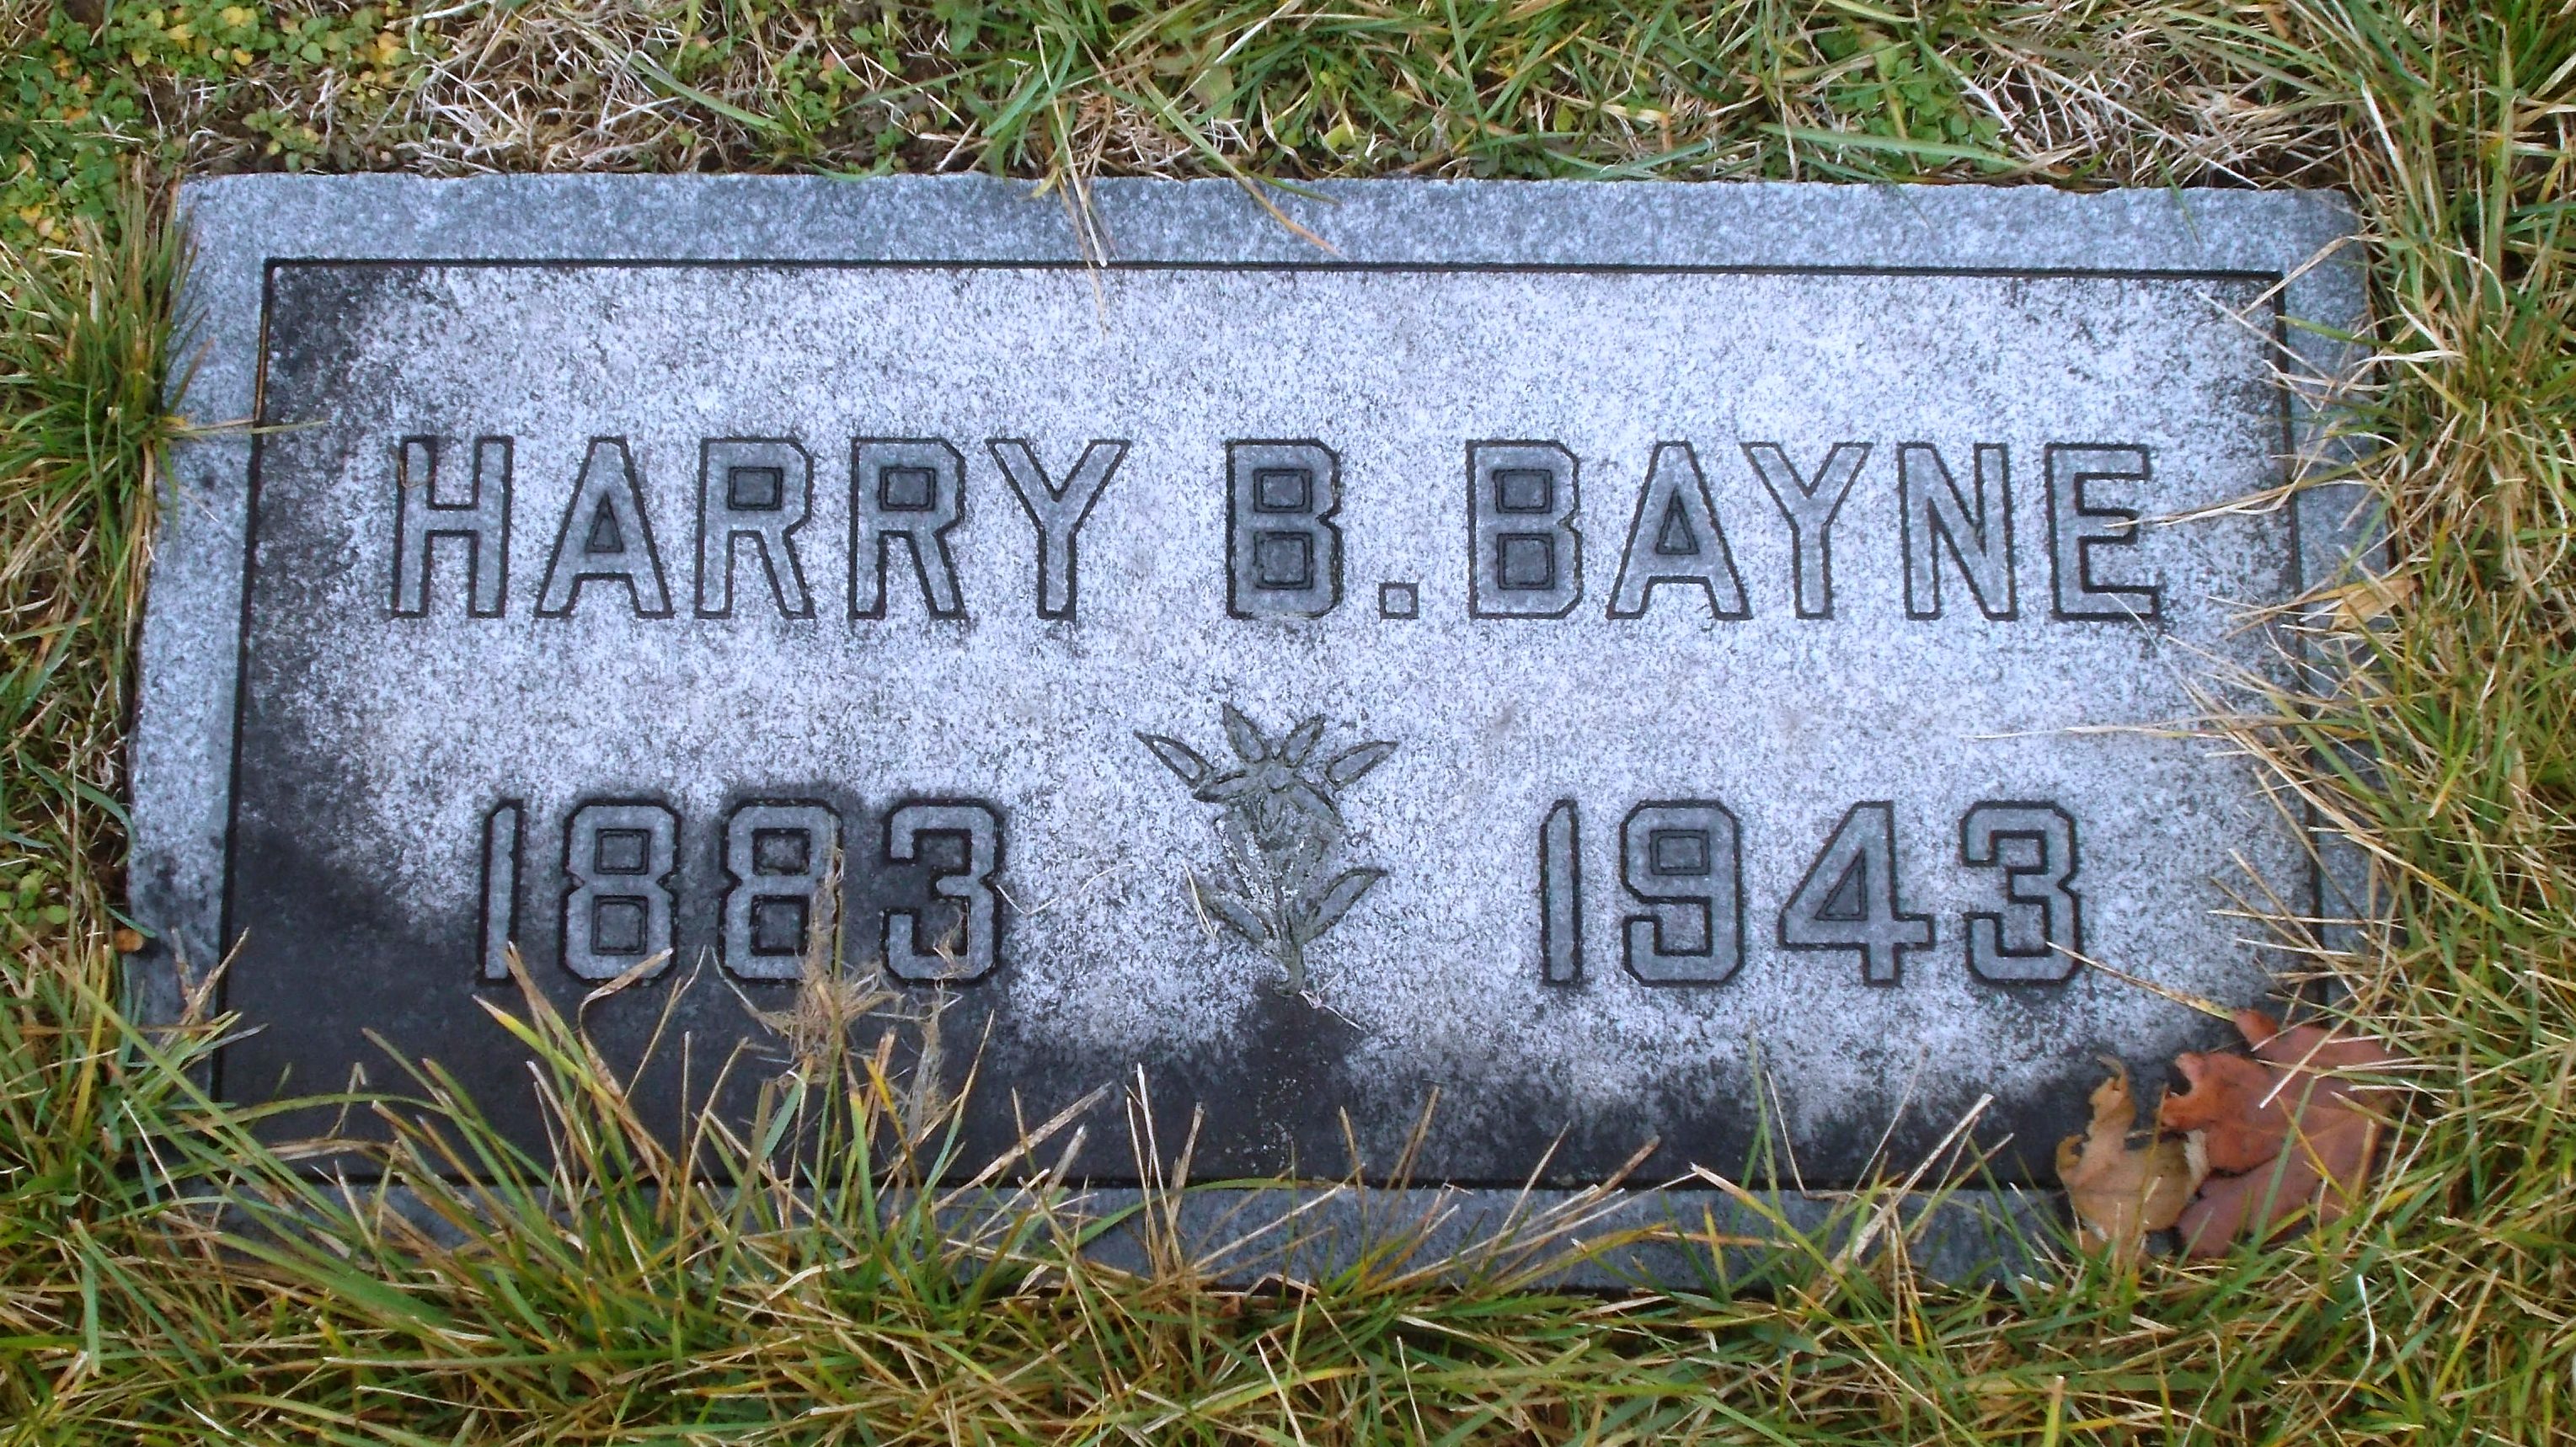 Harry B Bayne